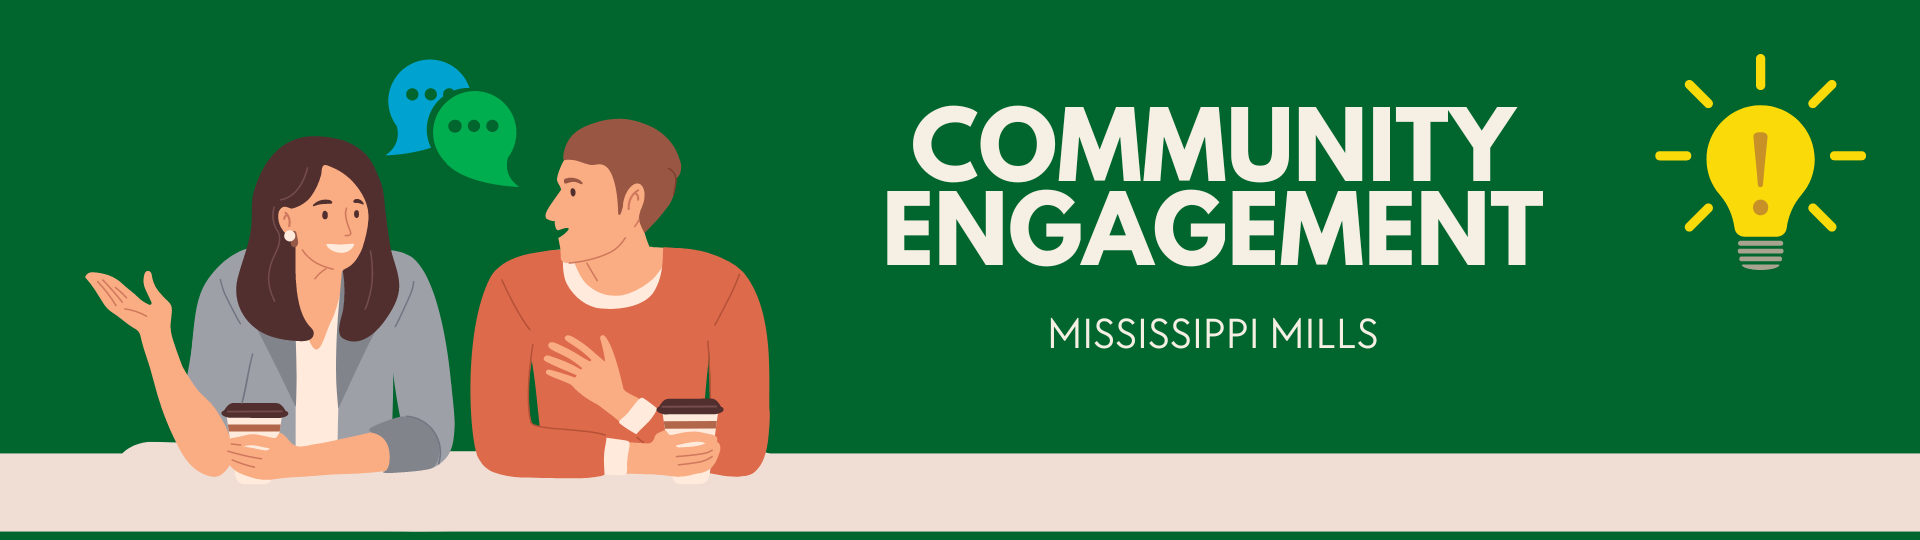 Community Engagement Mississippi Mills